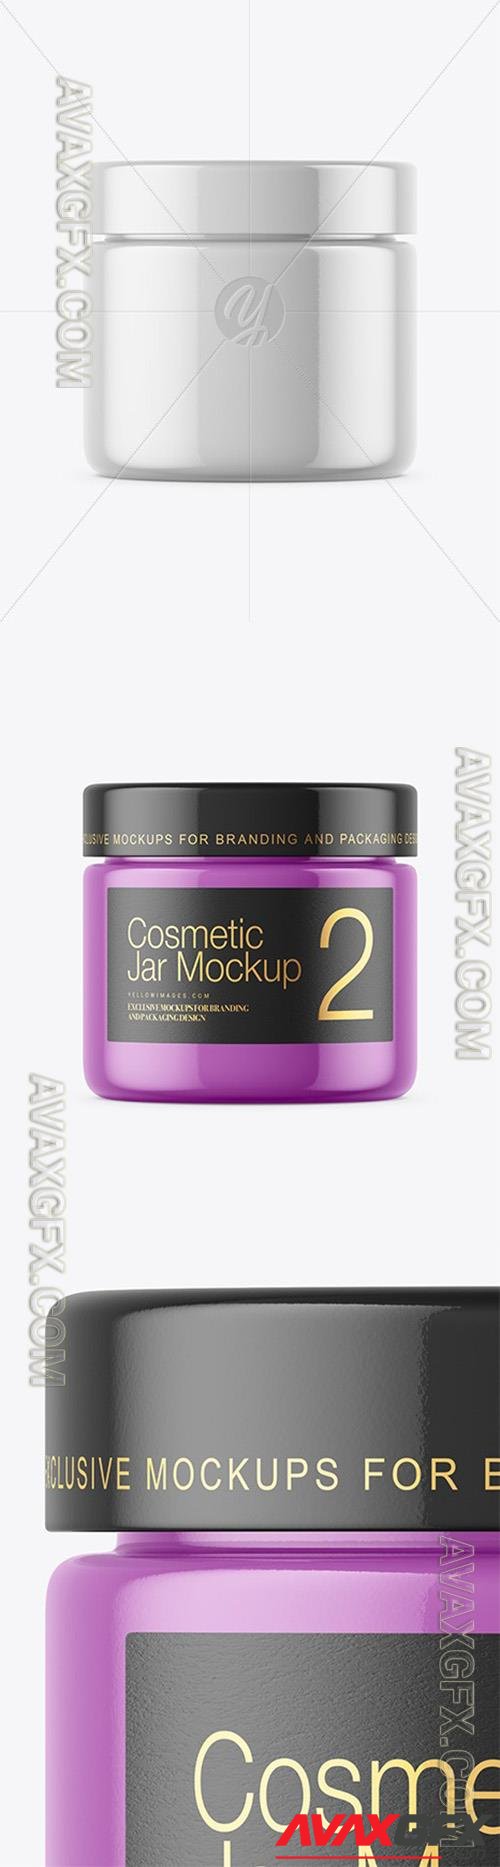 Glossy Cosmetic Jar Mockup 50511 TIF